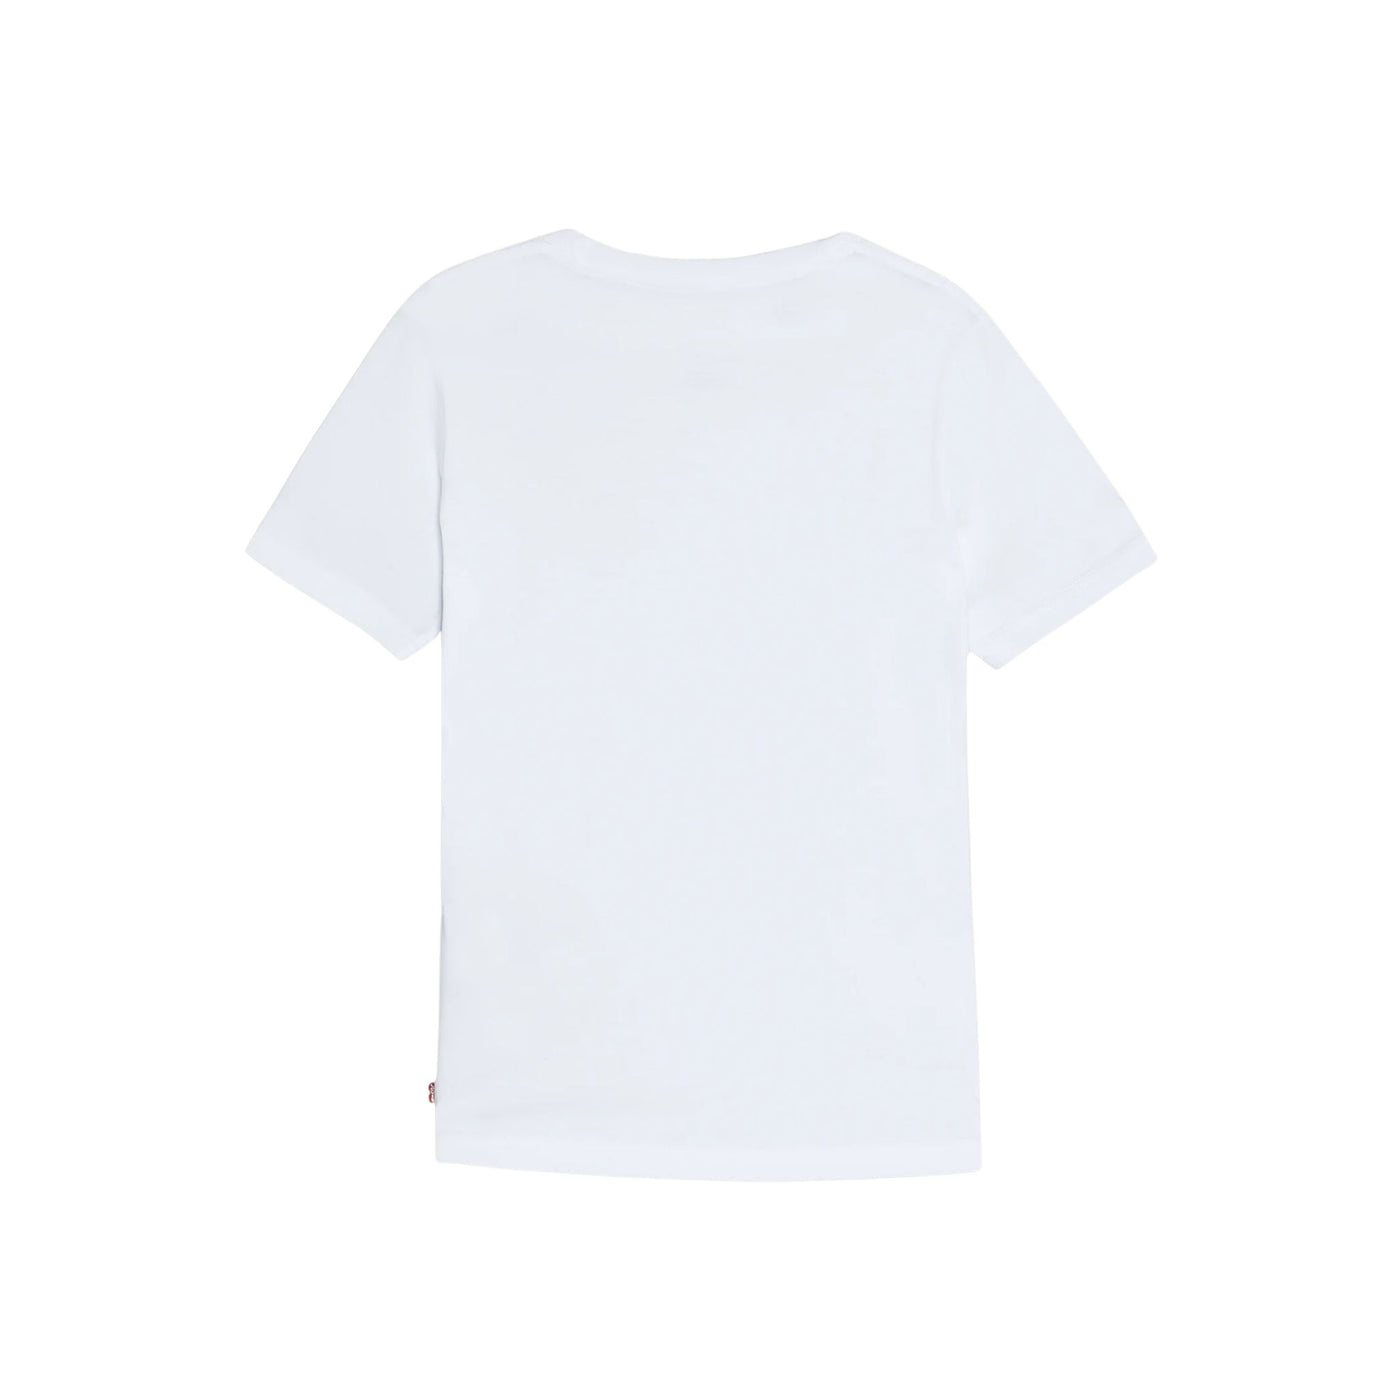 T-shirt bambino bianca firmata Levi's vista retro